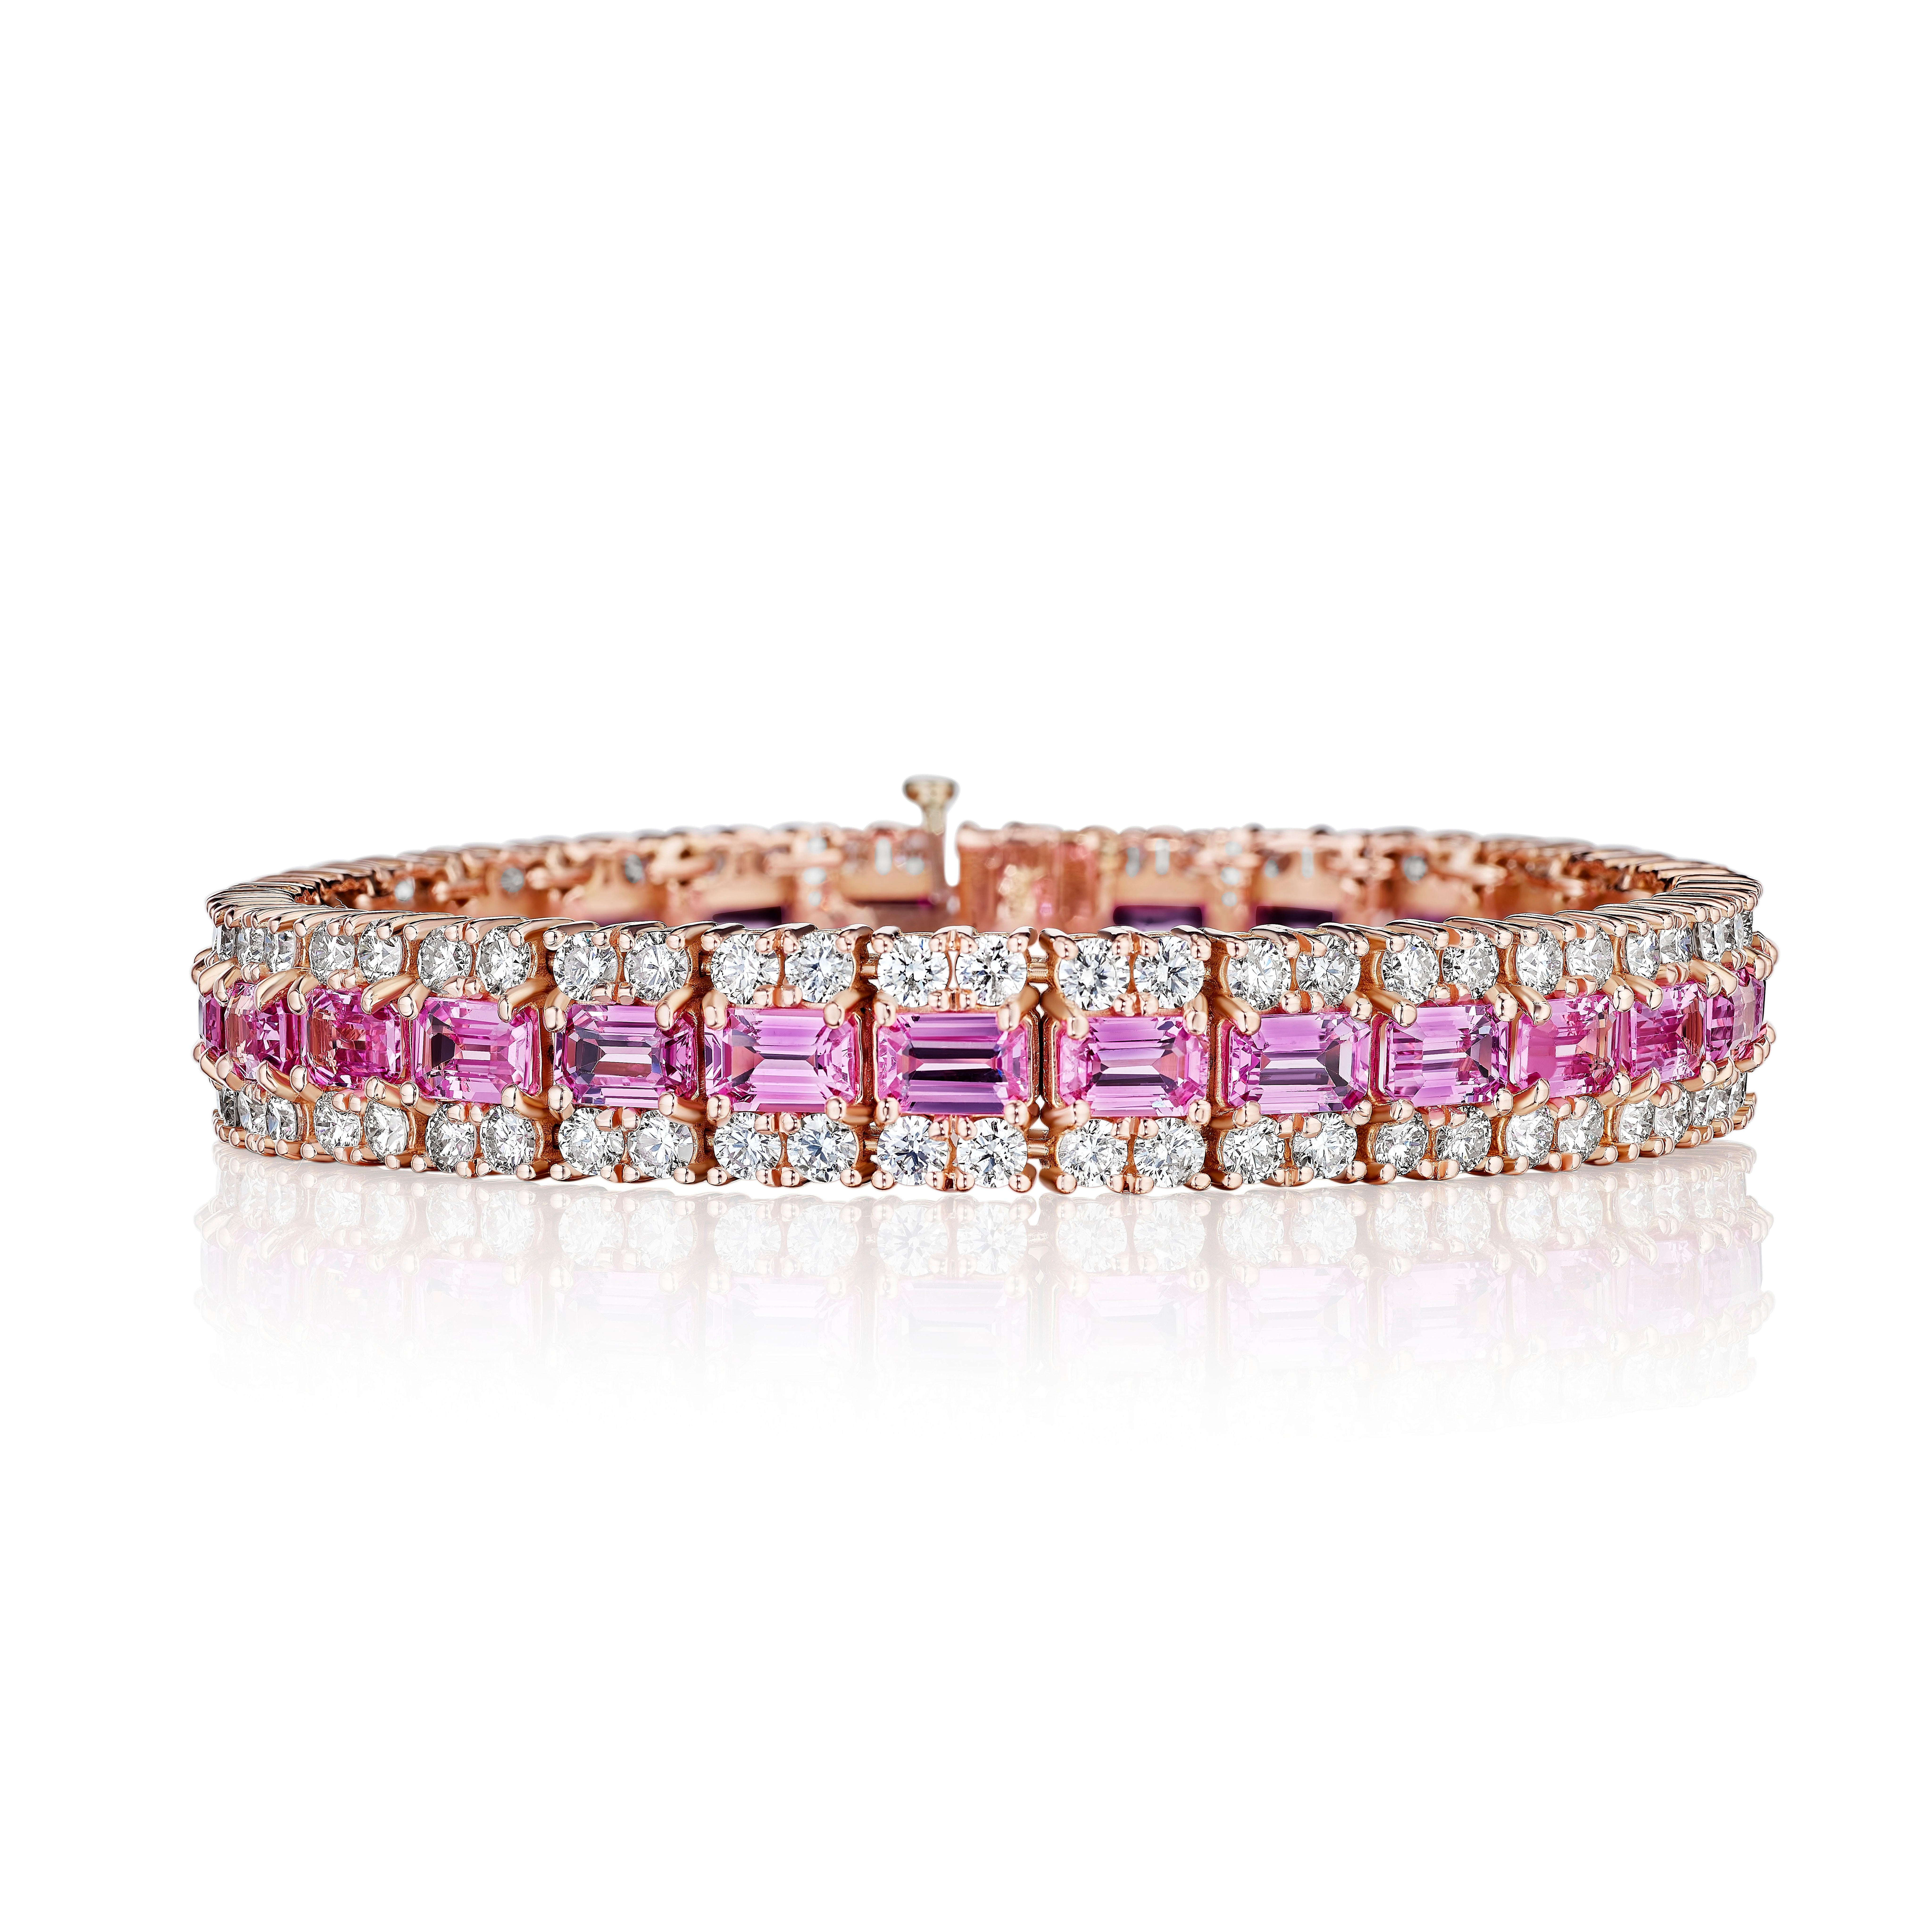 Women's Multi Row 25.11 Carat Pink Sapphire and Diamond Bracelet For Sale